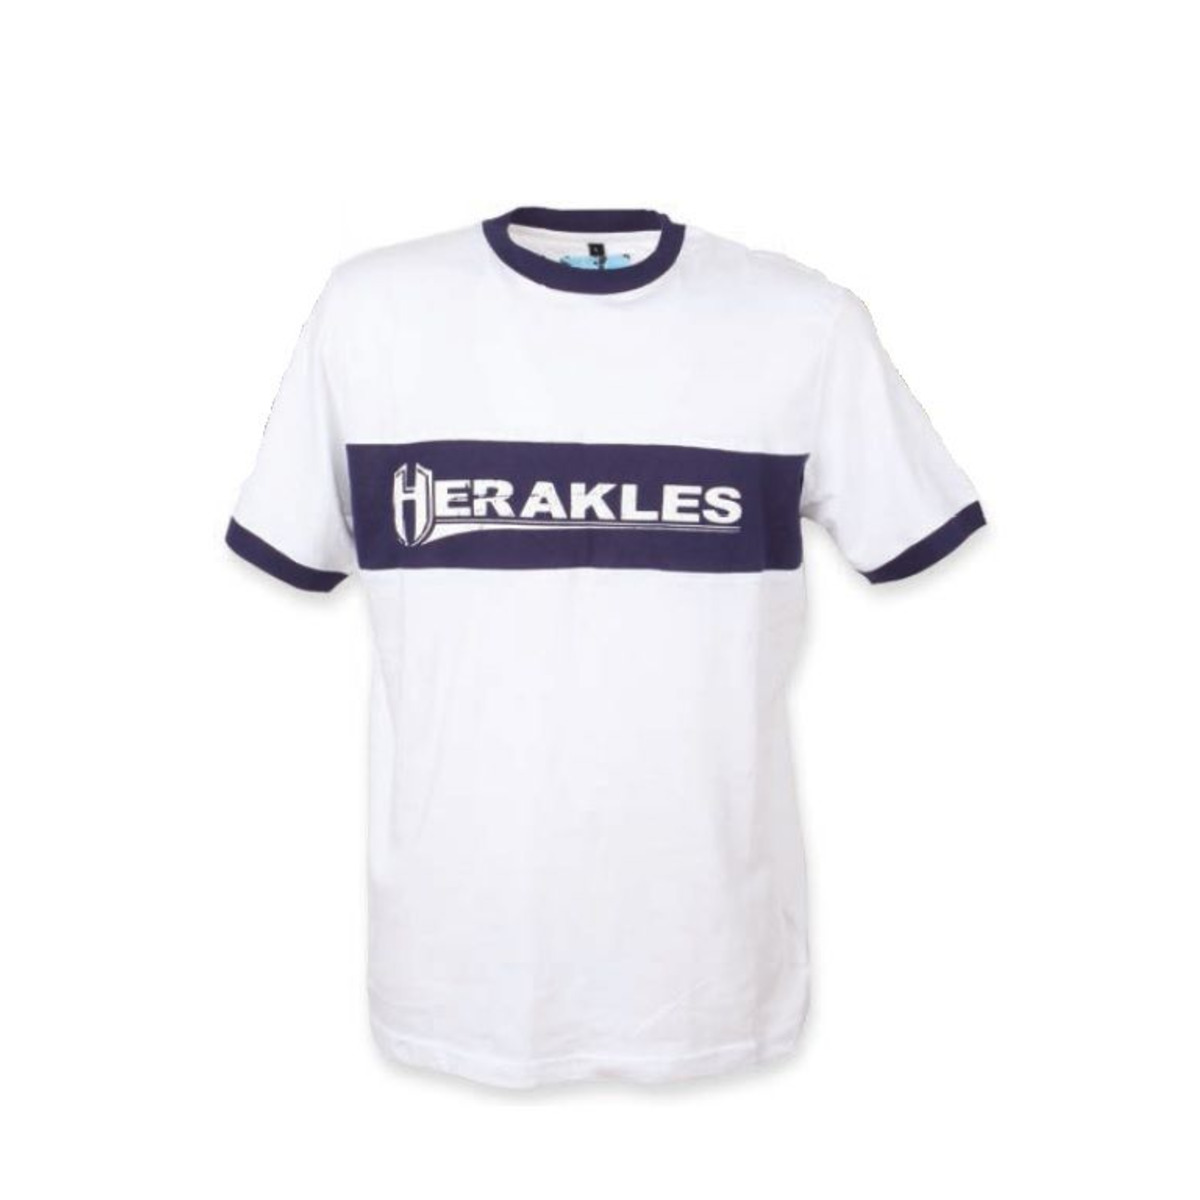 Herakles T-Shirt Bianca-Blu - S